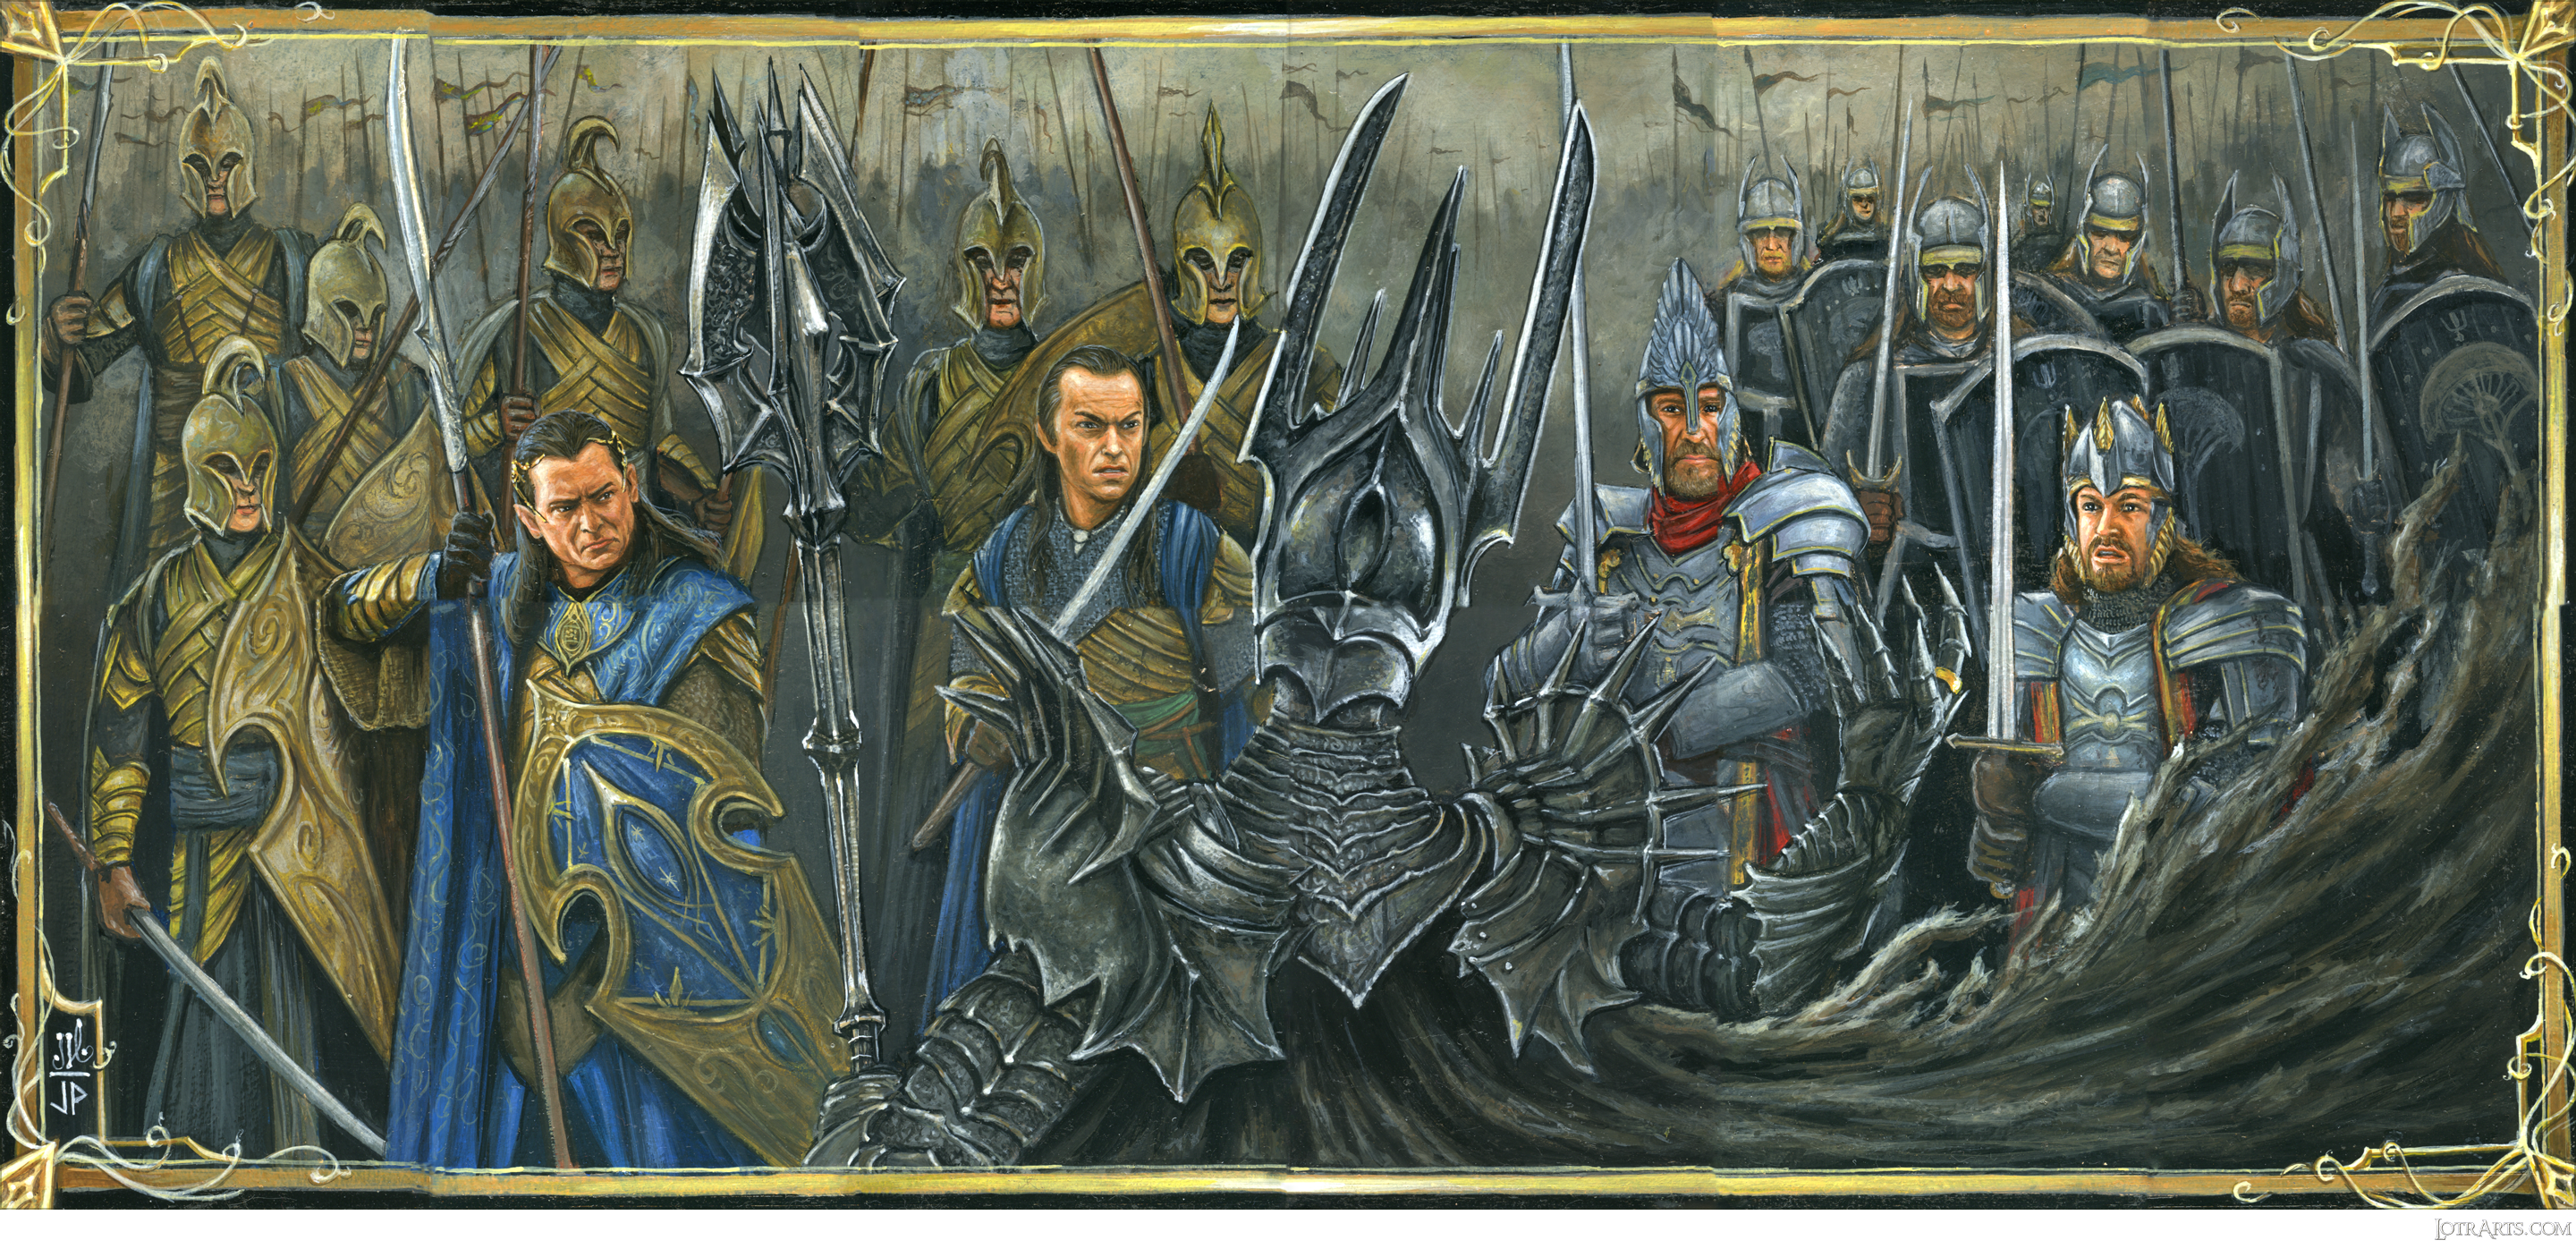 Twelve-card panel of the Last Alliance battling Sauron by Potratz and Hai<span class="ngViews">13 views</span>